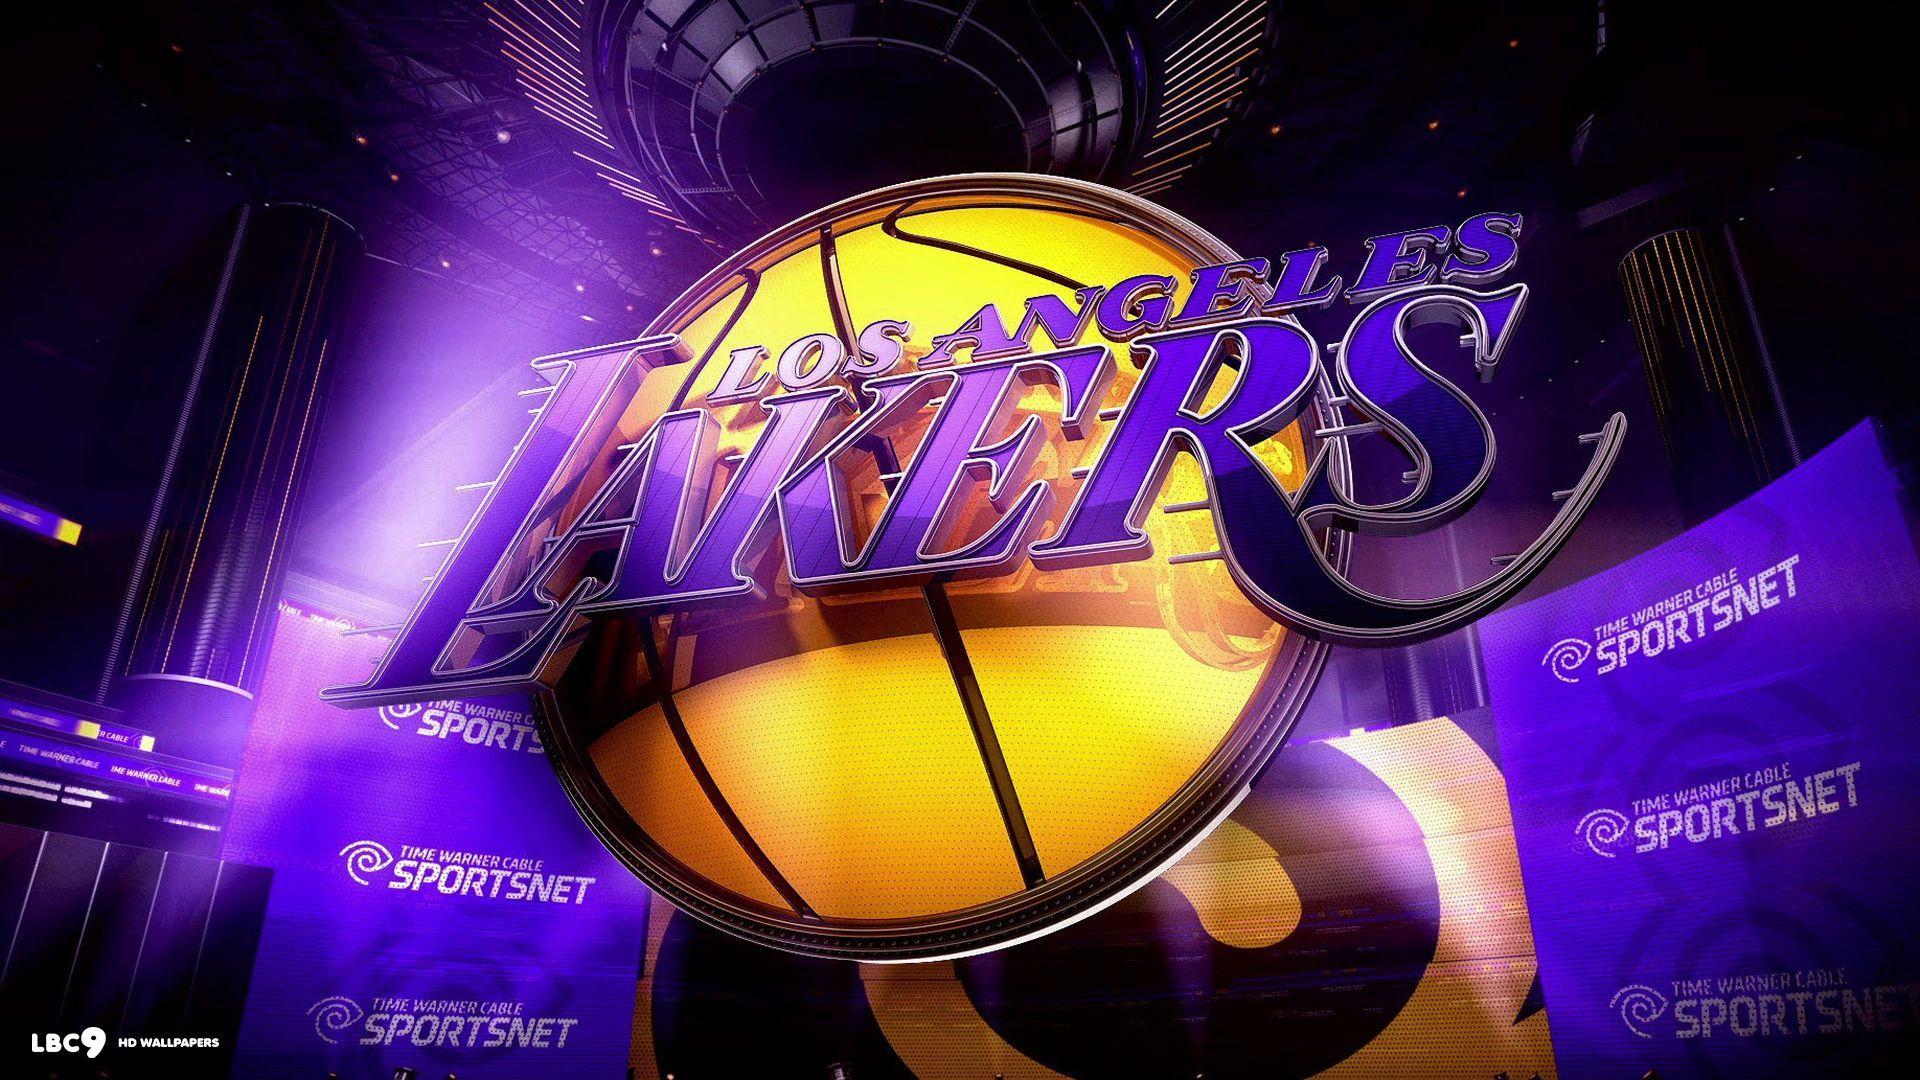 3D Lakers Wallpaper High Definition Wallpaper HD. Lakers wallpaper, Lakers logo, Los angeles lakers logo